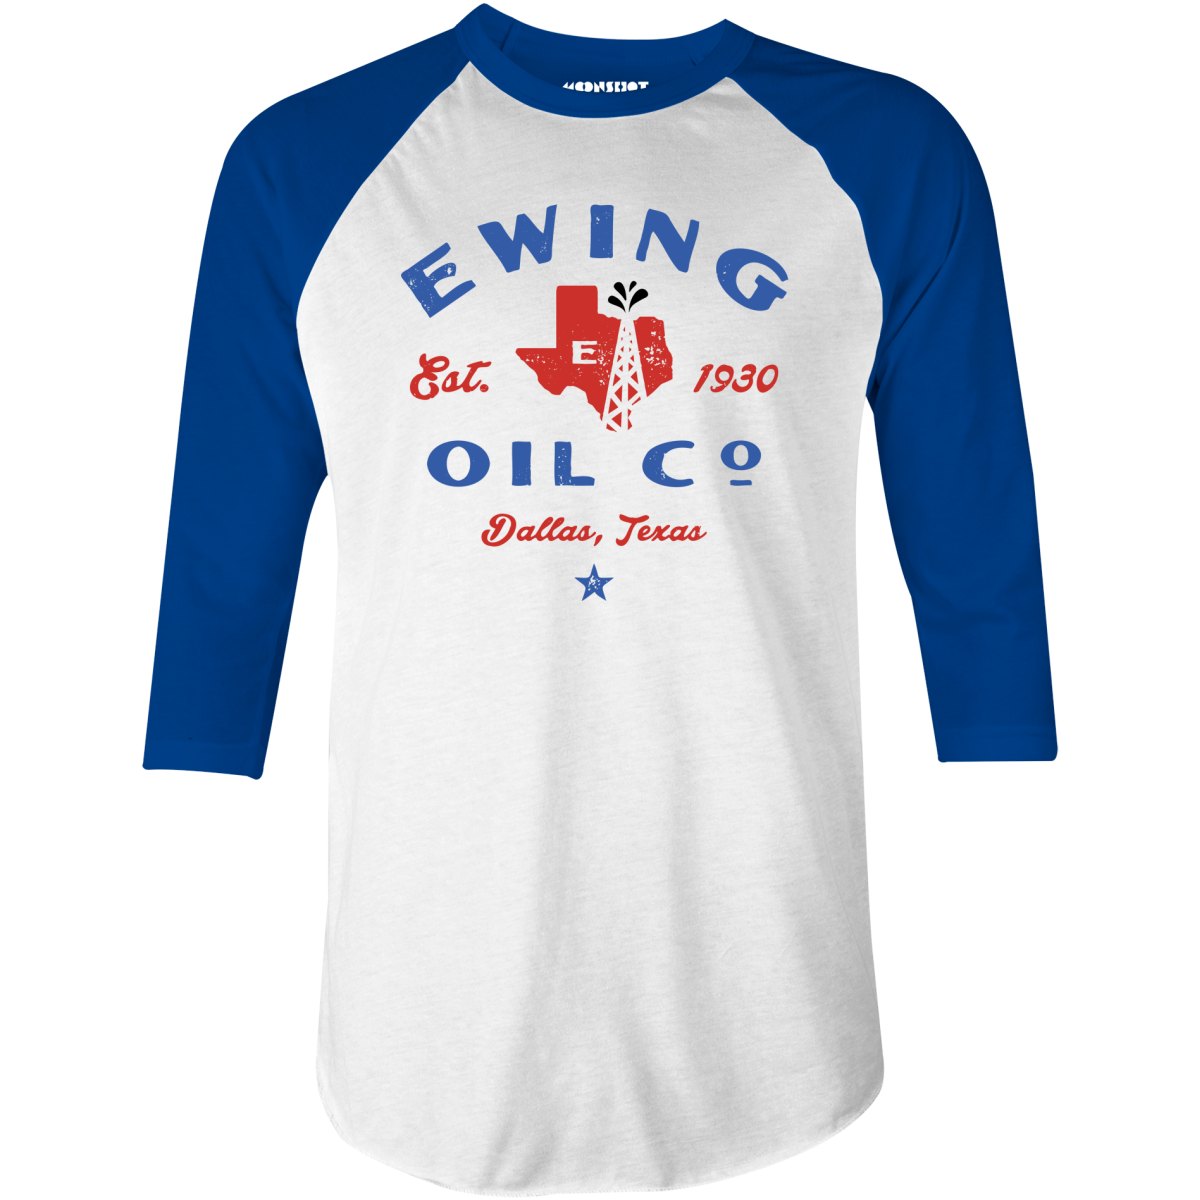 Ewing Oil Co - Dallas, Texas - 3/4 Sleeve Raglan T-Shirt